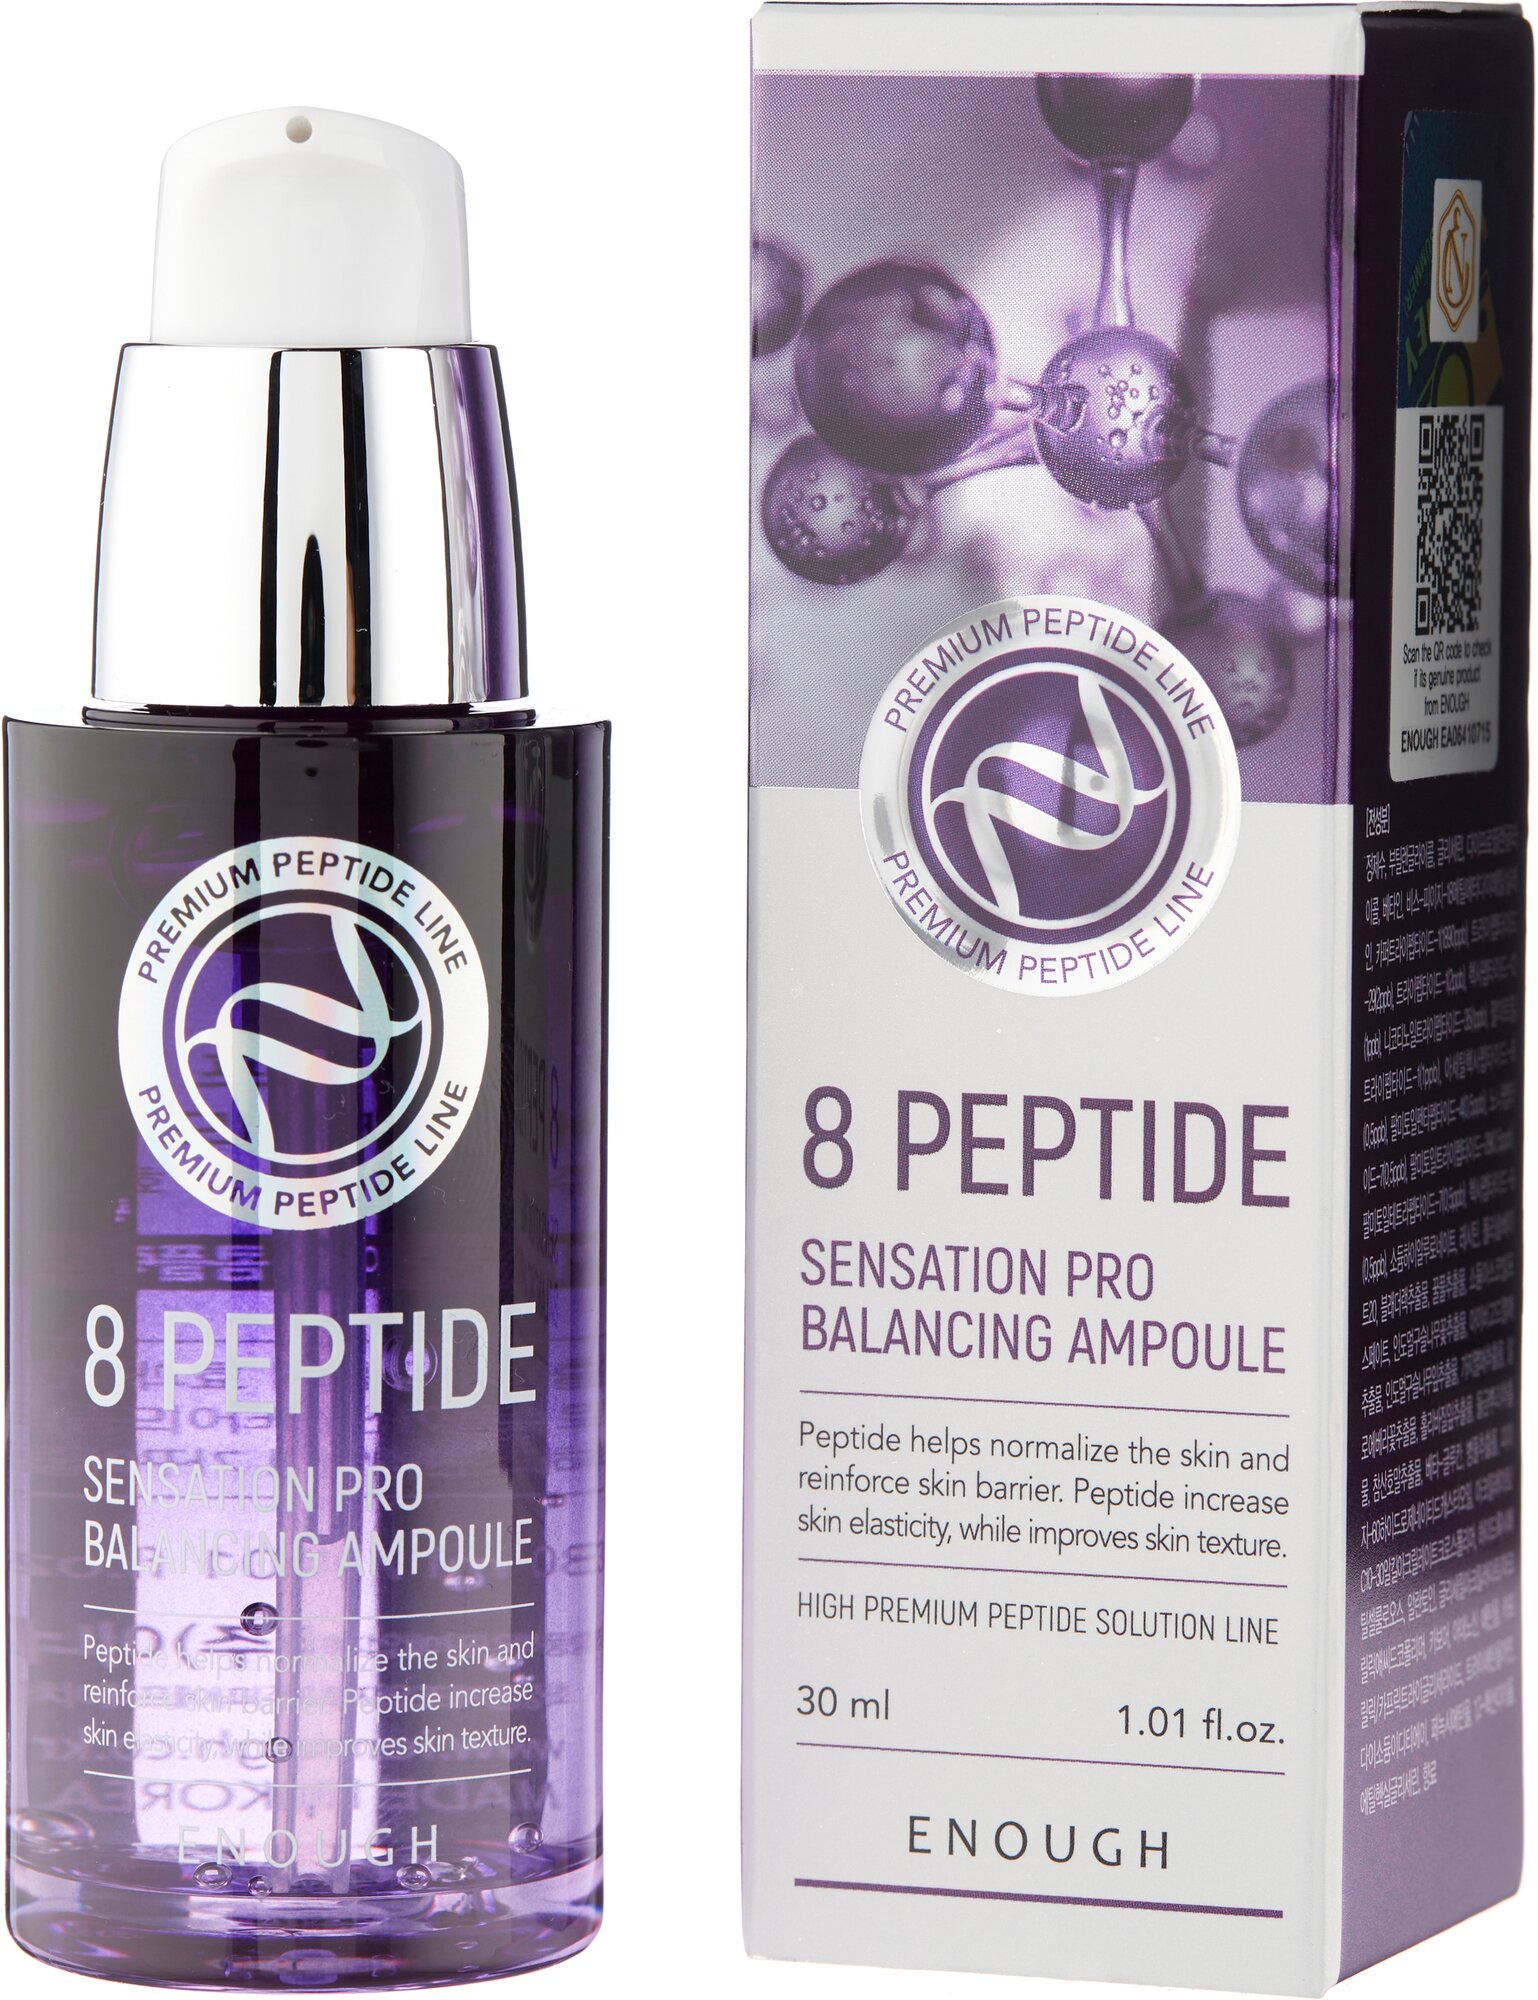 Enough 8 Peptide Sensation Pro Balancing Ampoule Сыворотка для лица с пептидным комплексом